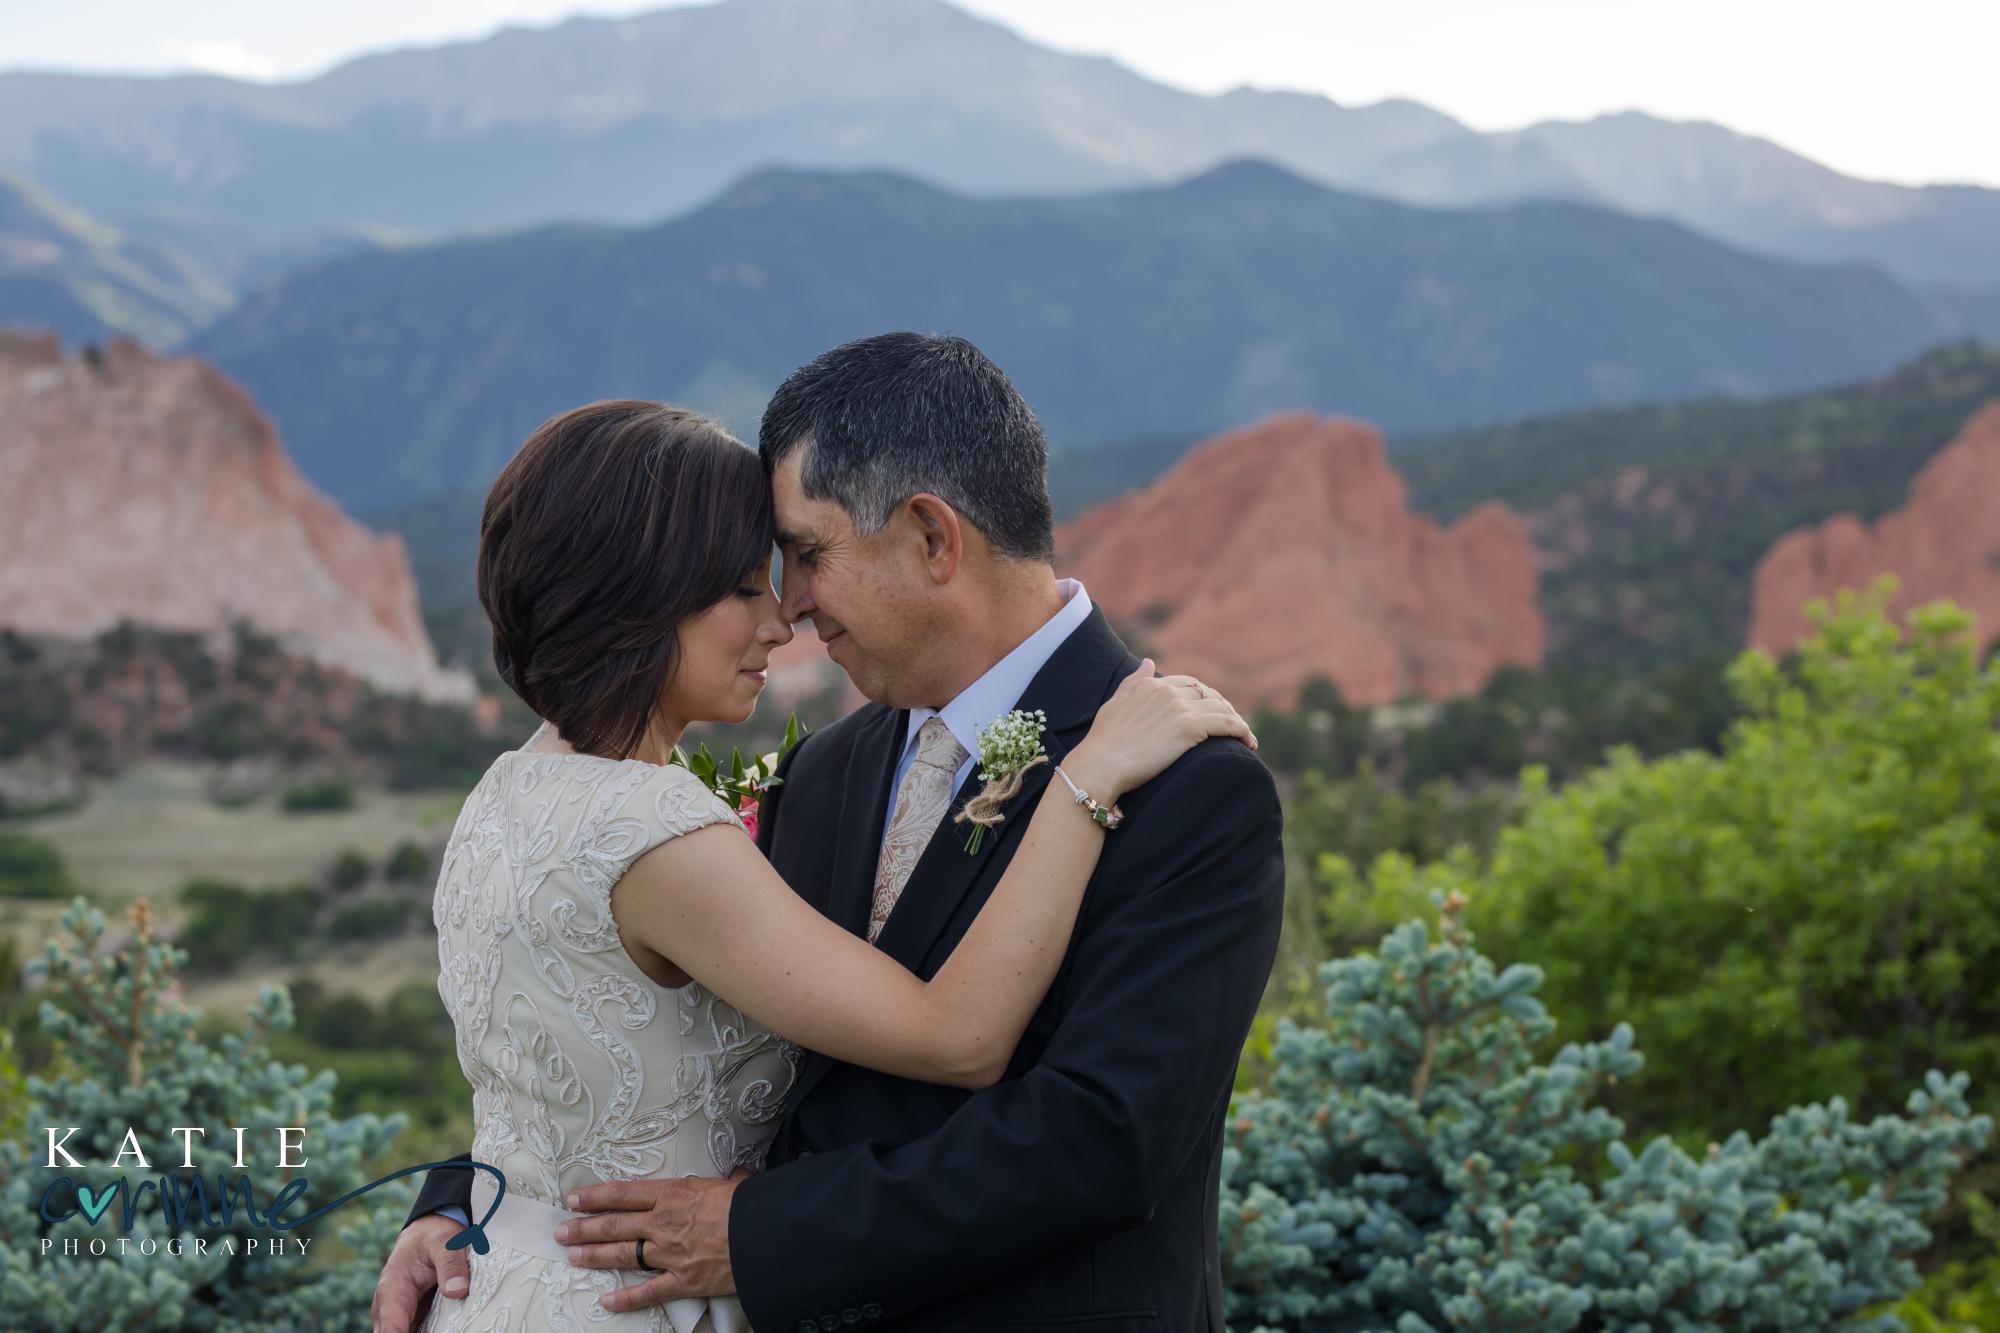 New Mexico couple at destination wedding